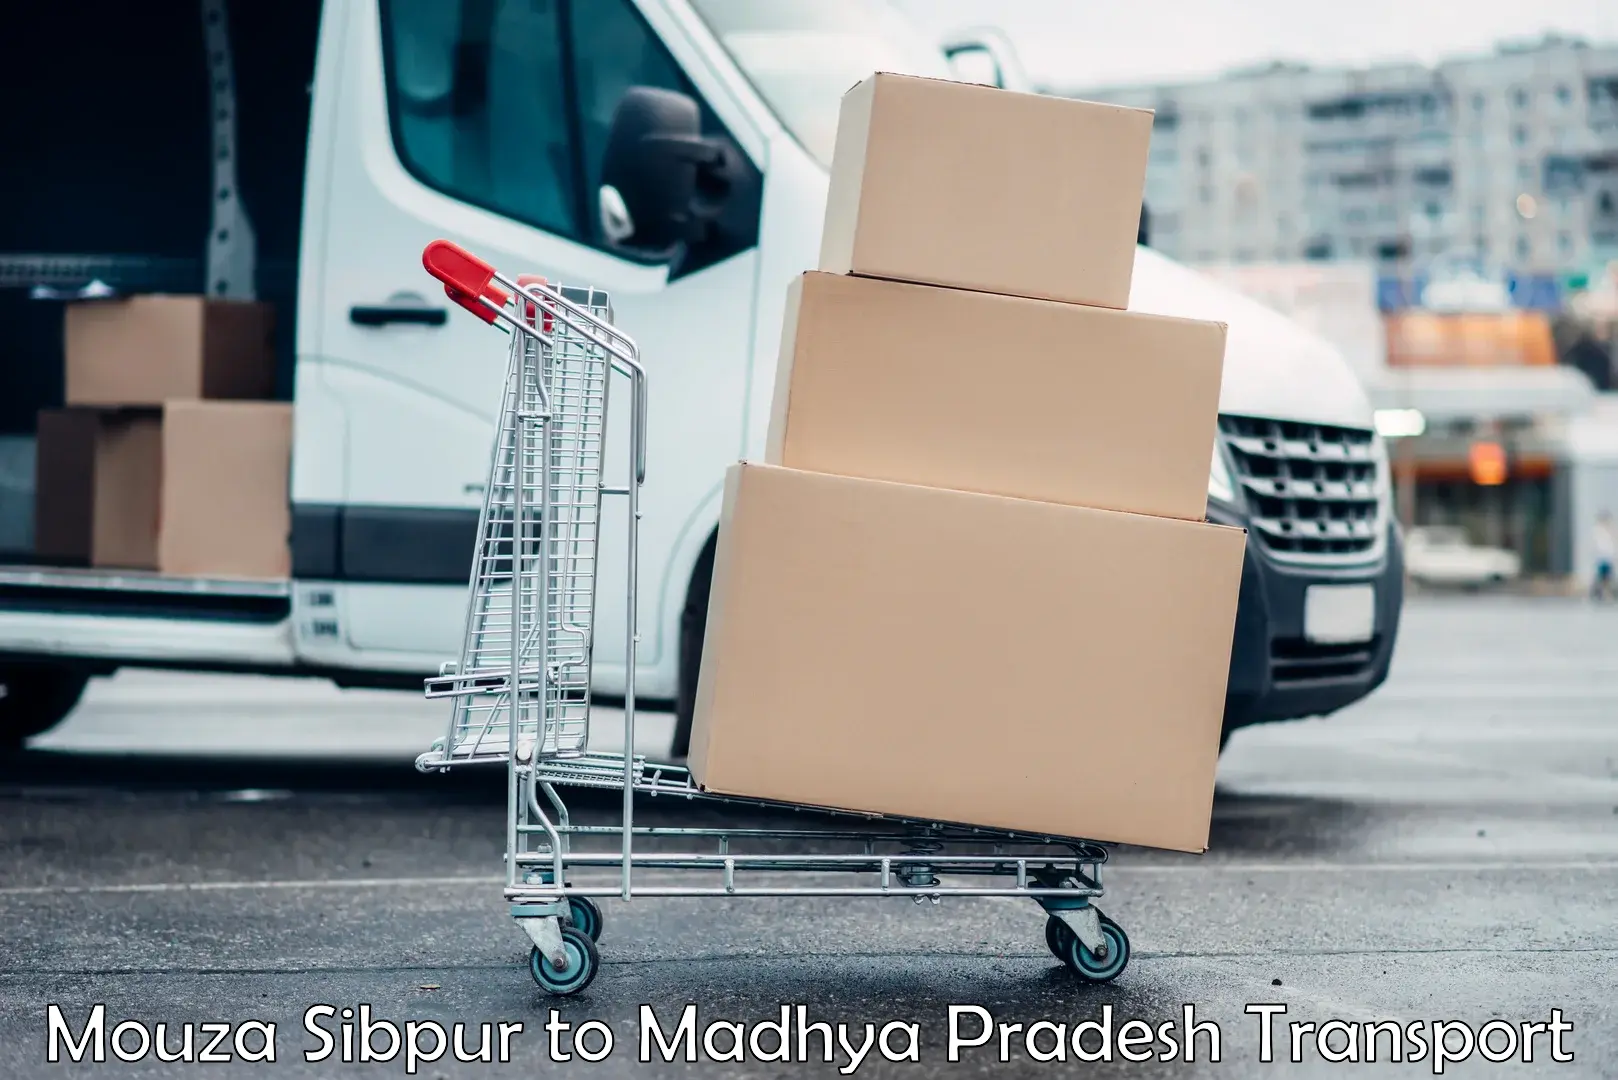 International cargo transportation services Mouza Sibpur to Gadarwara